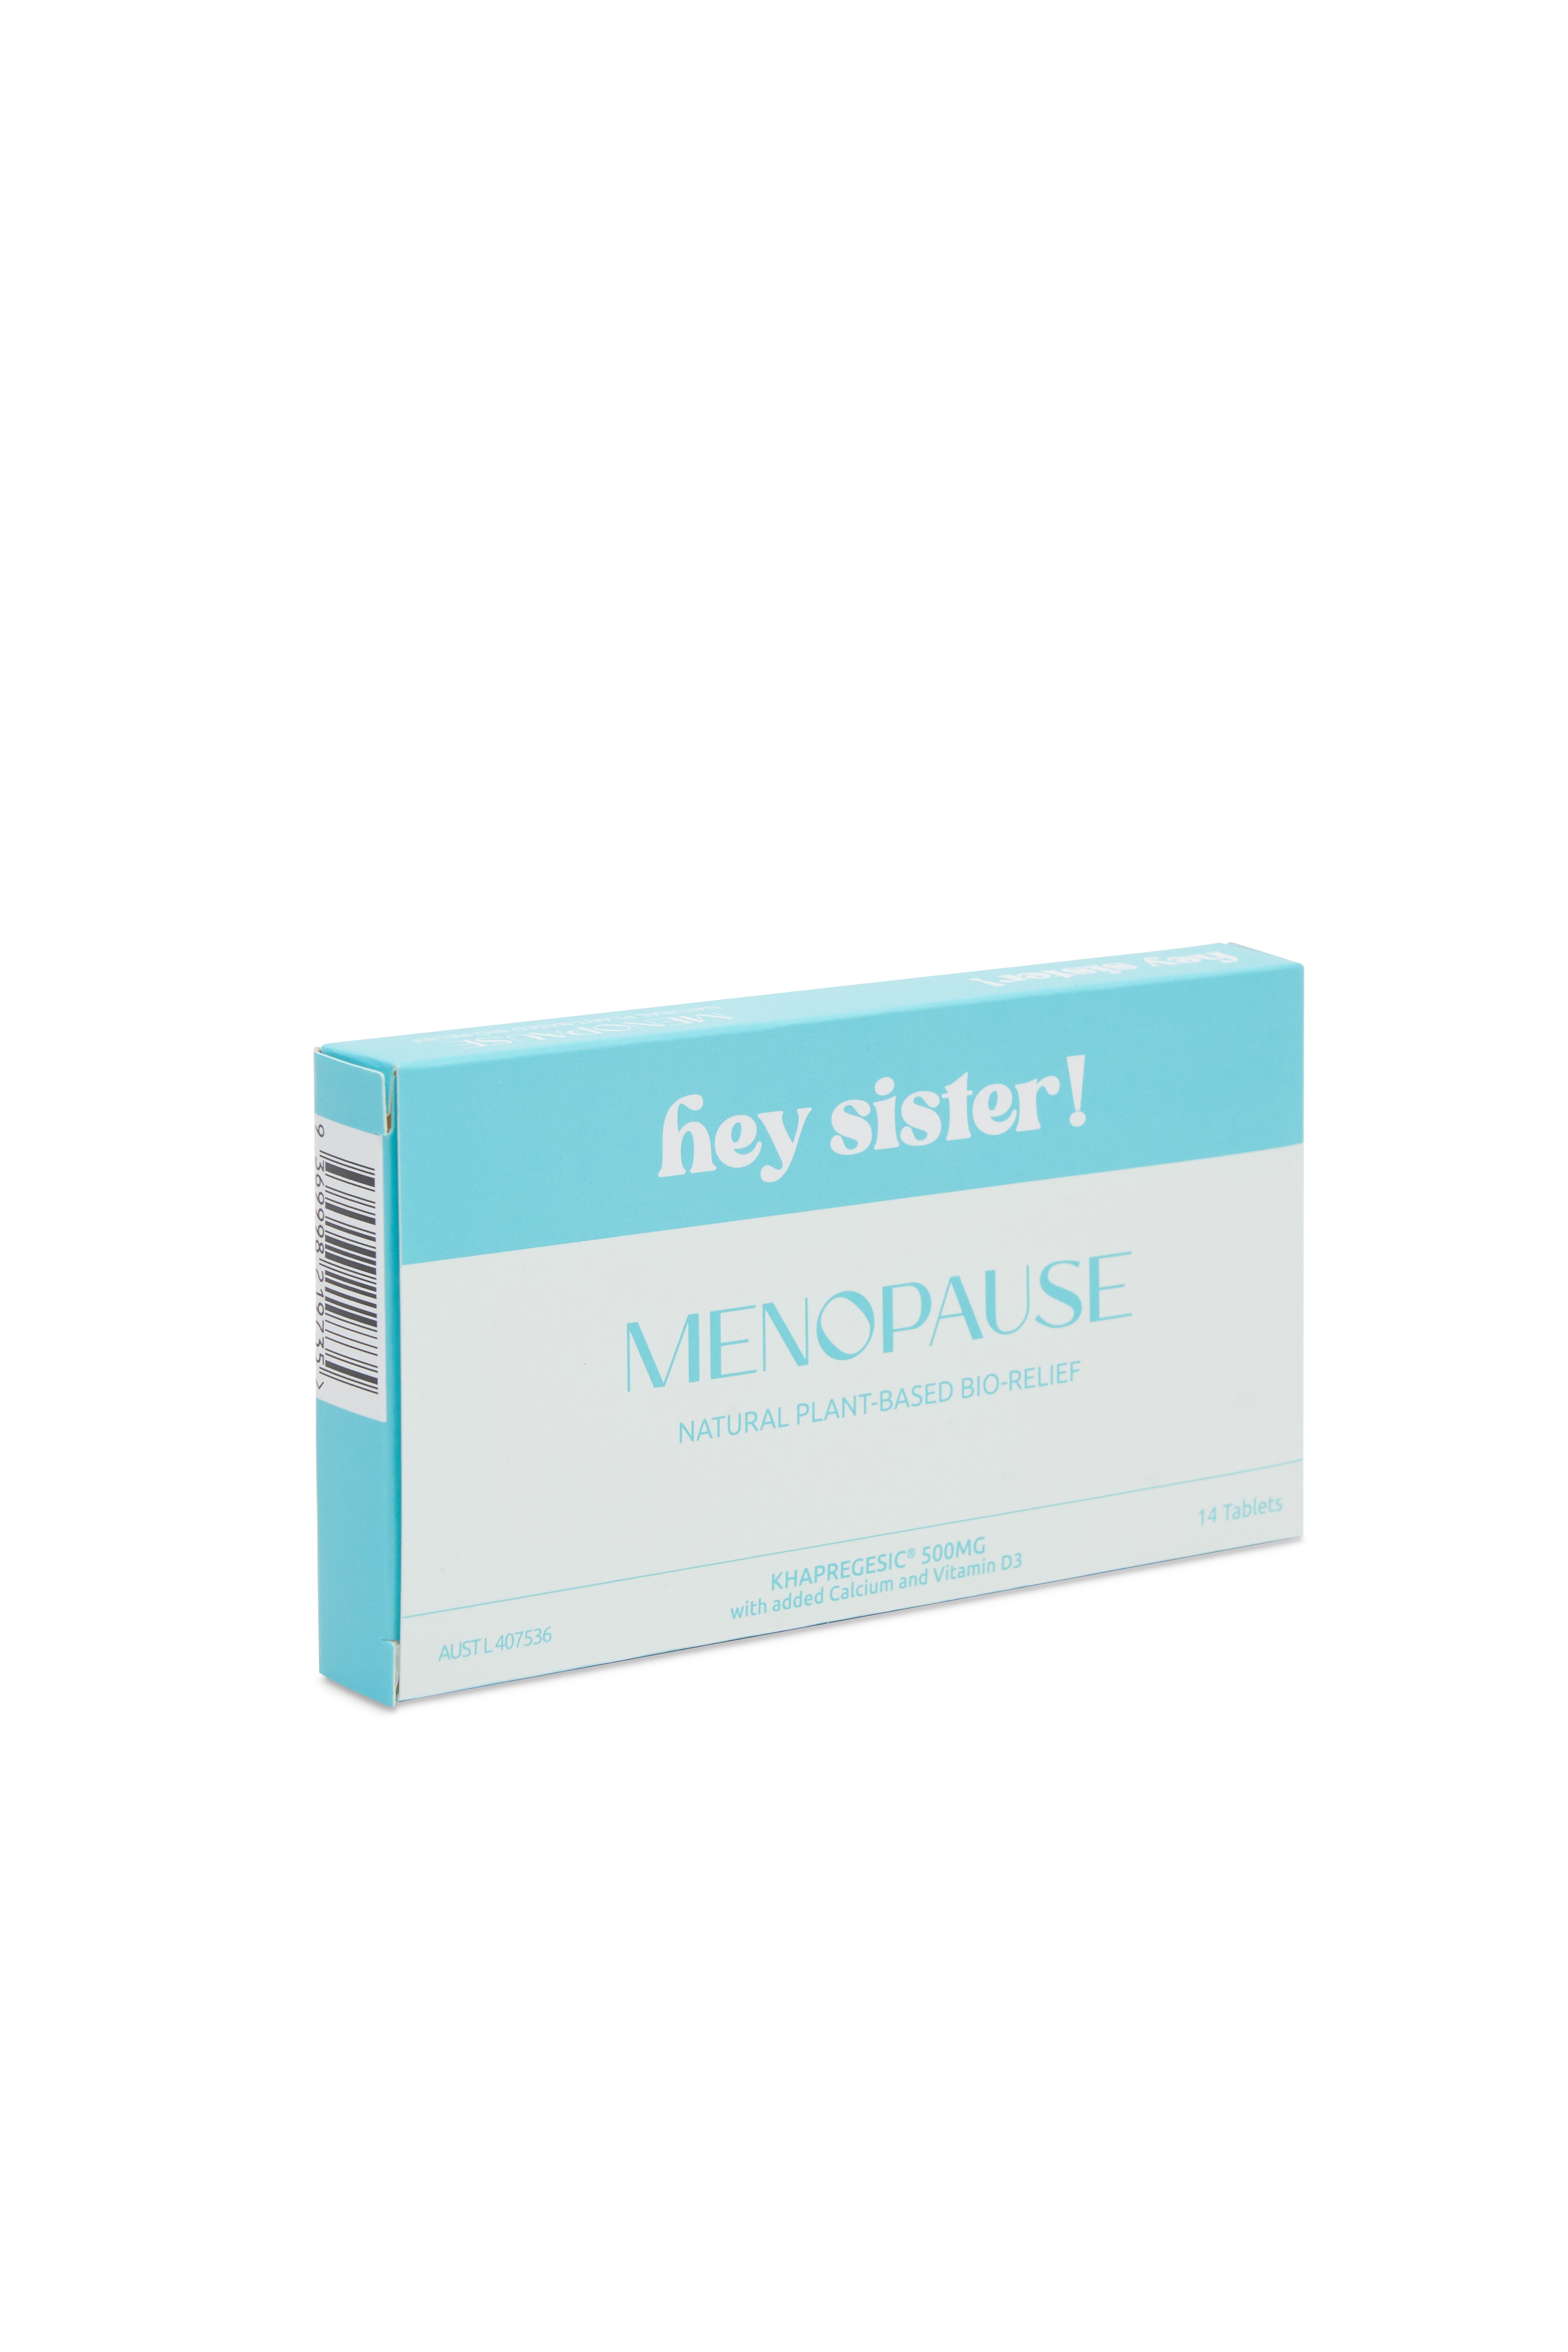 Hey Sister! Menopause - 1 Month Pack